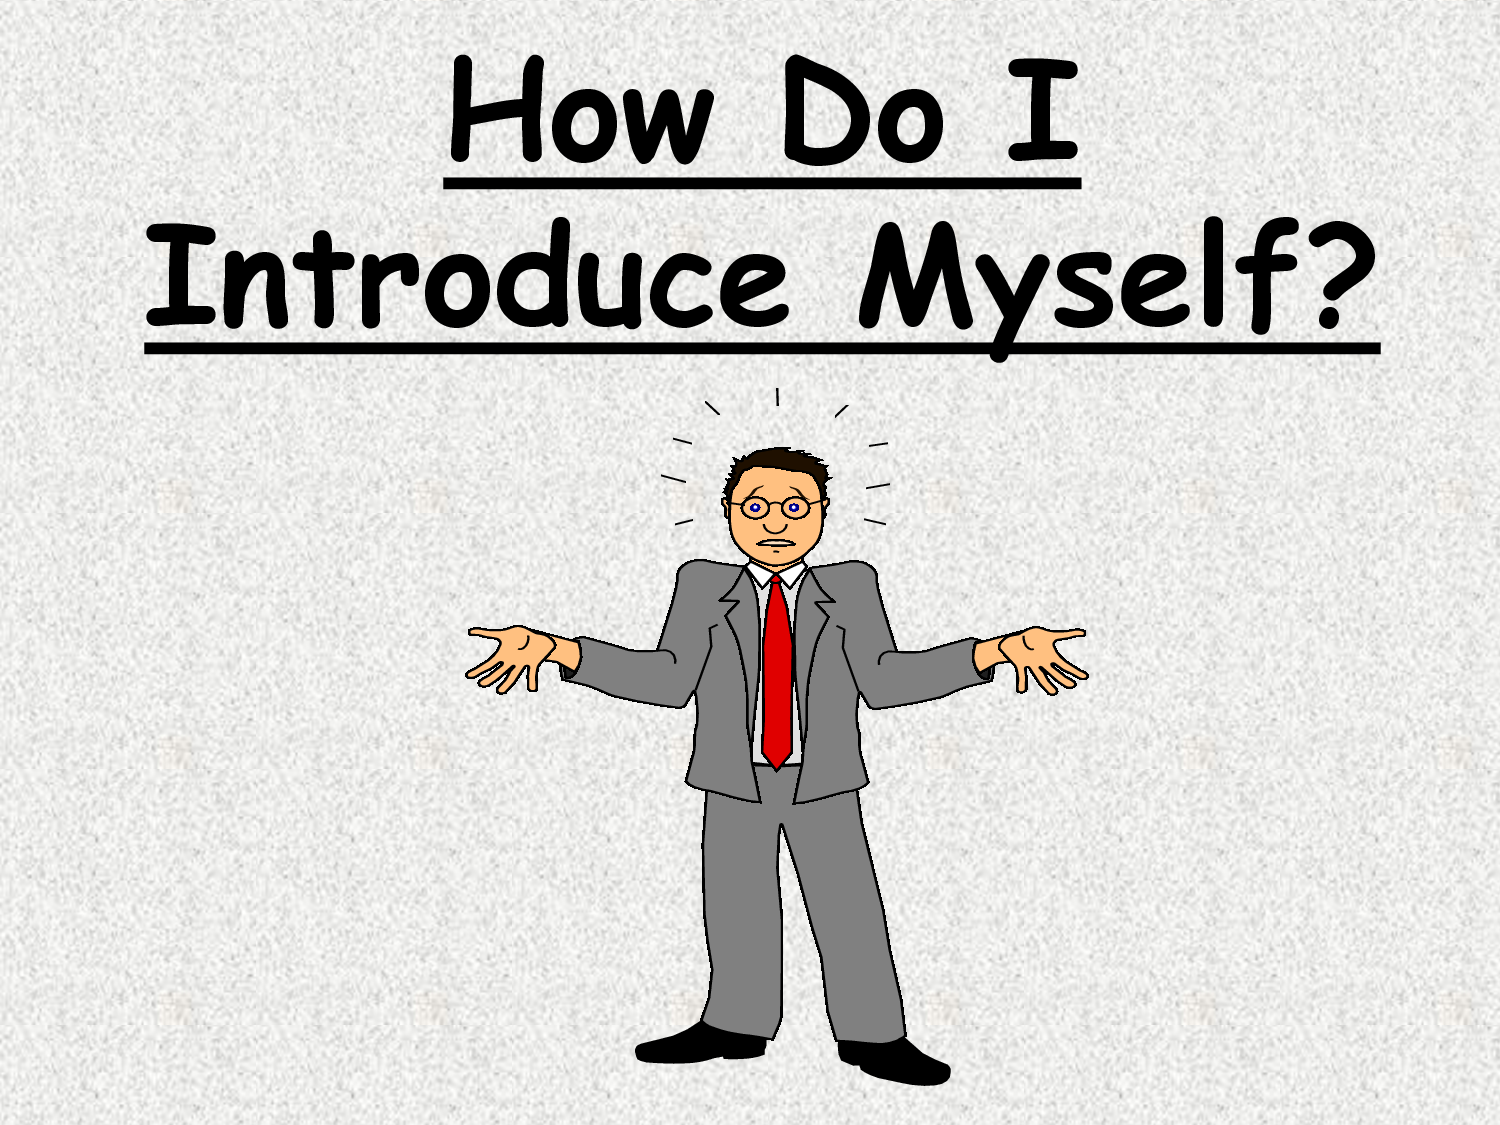 English myself. Английский introduce yourself. Introducing myself. Introduce myself in English. How to introduce myself.